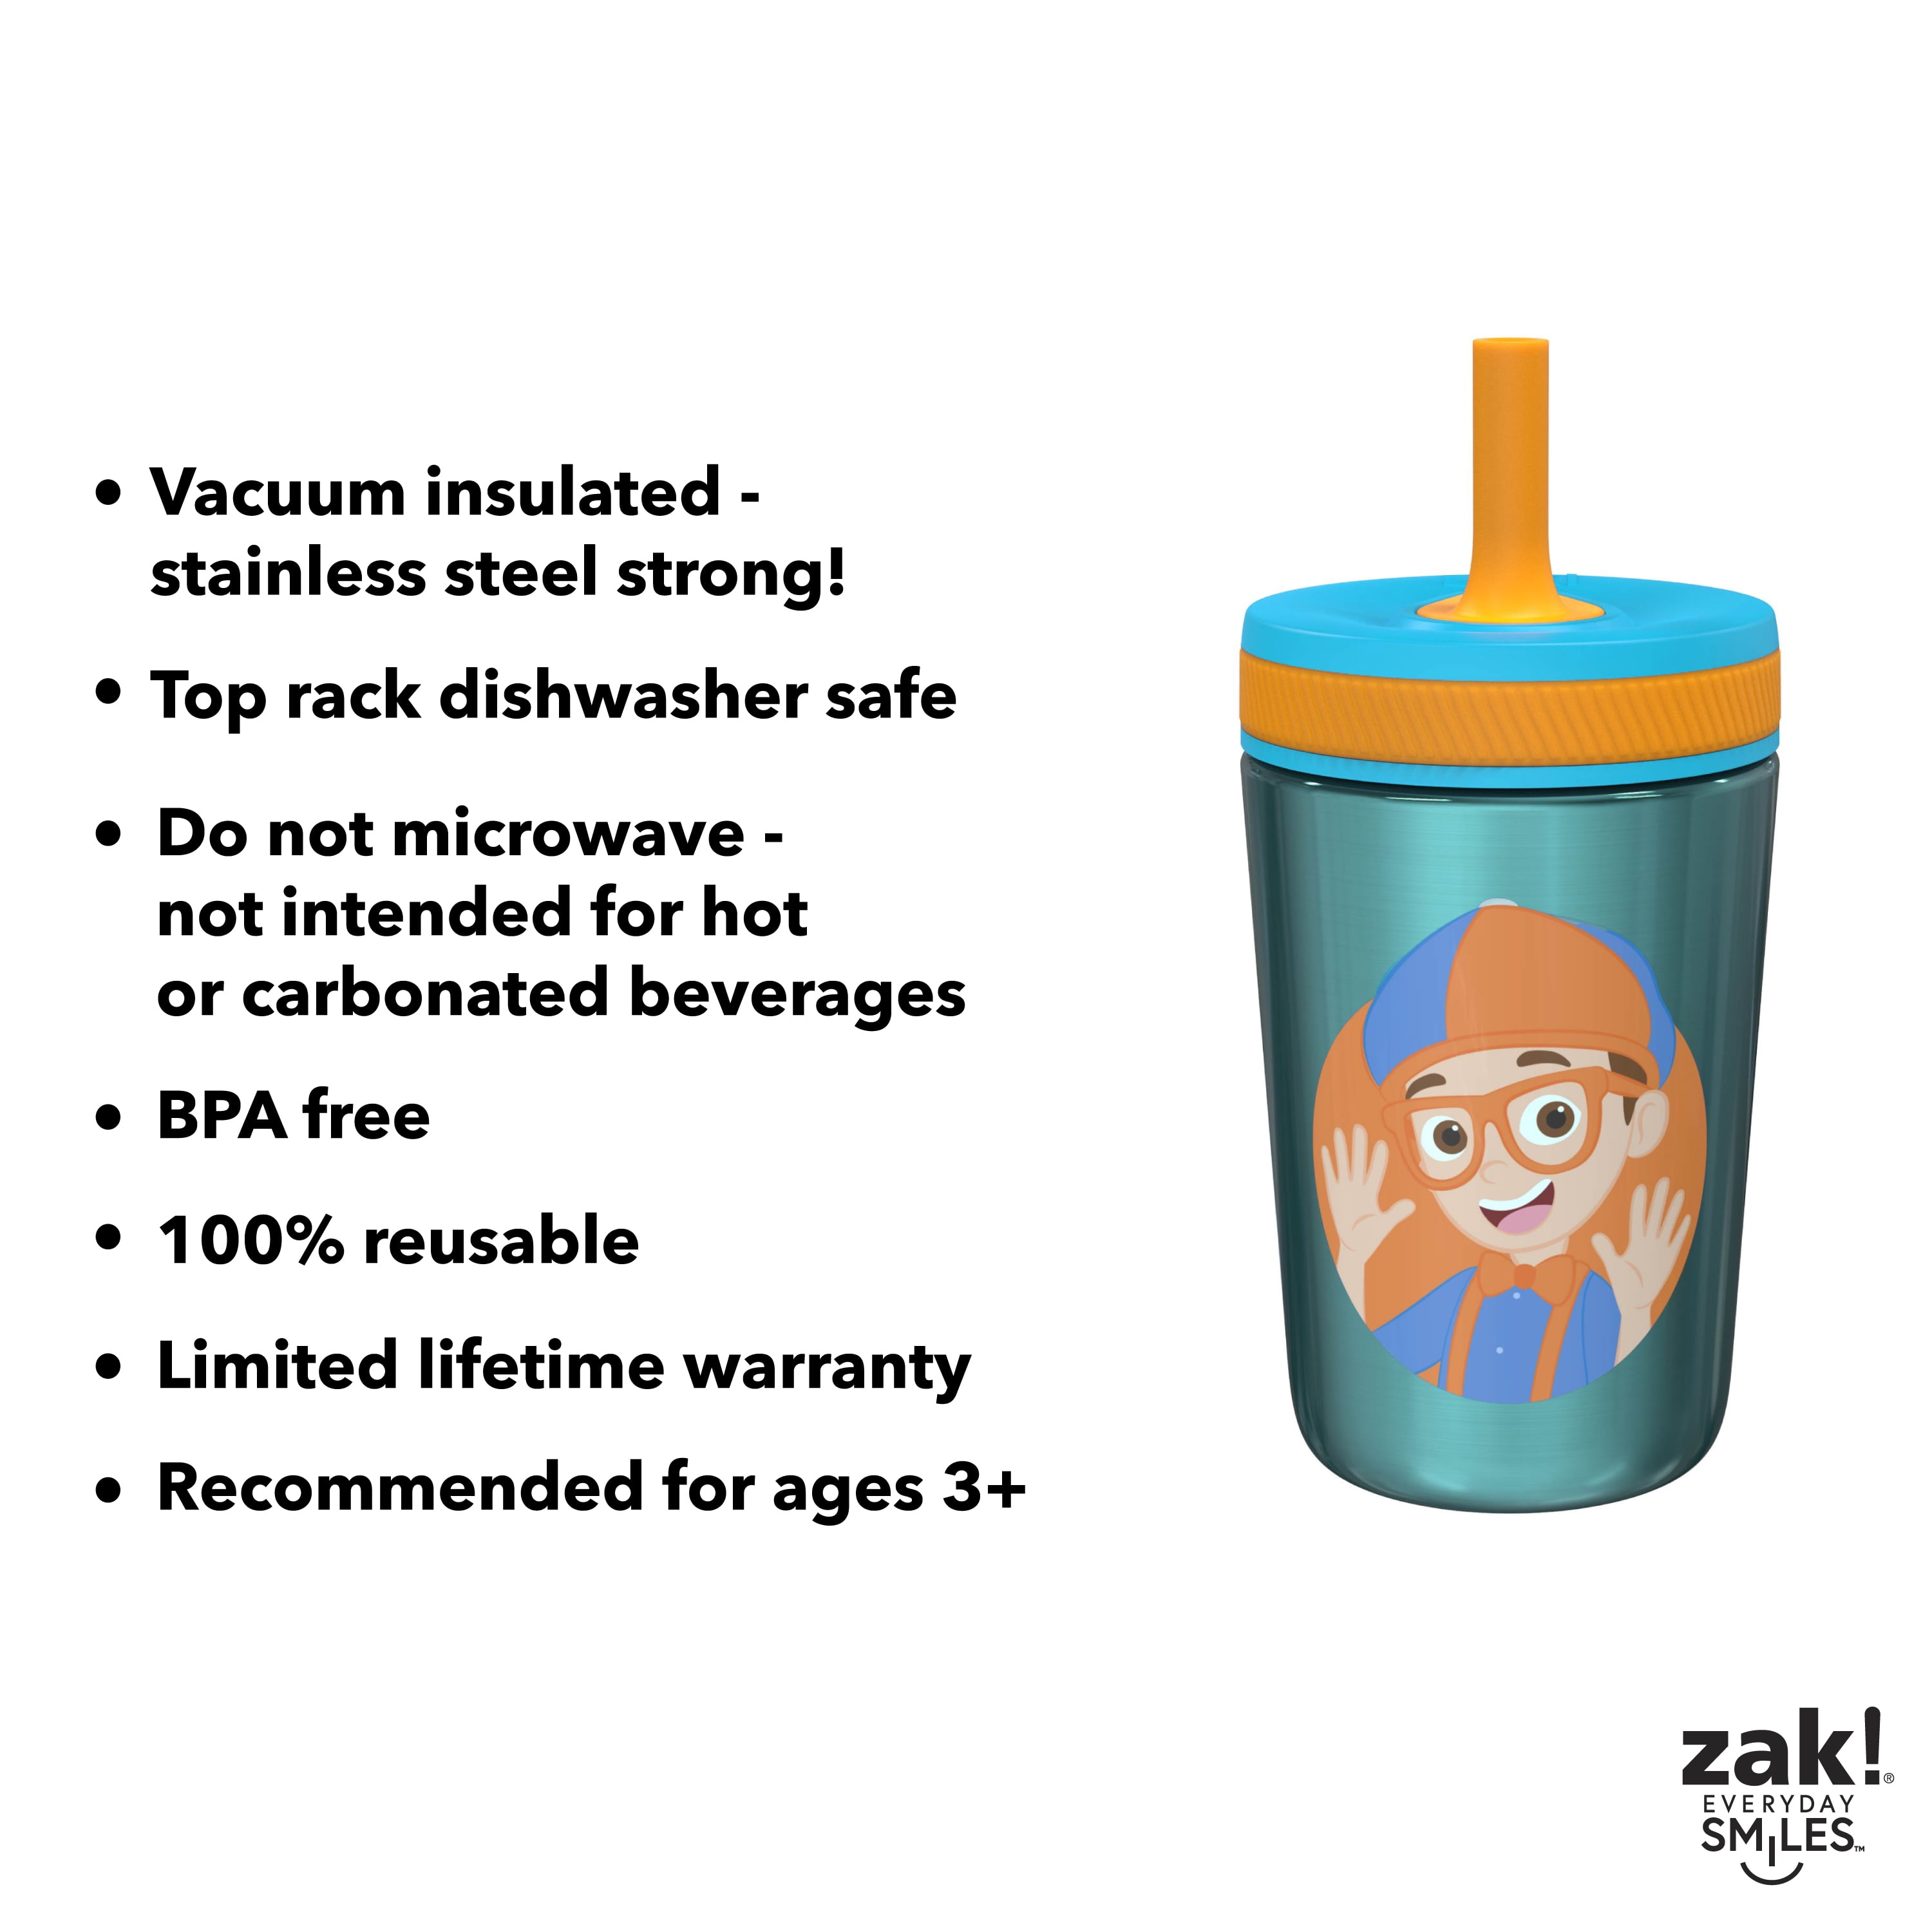 Zak Designs Blippi Kelso Toddler Cups For Travel or At Home, 12oz